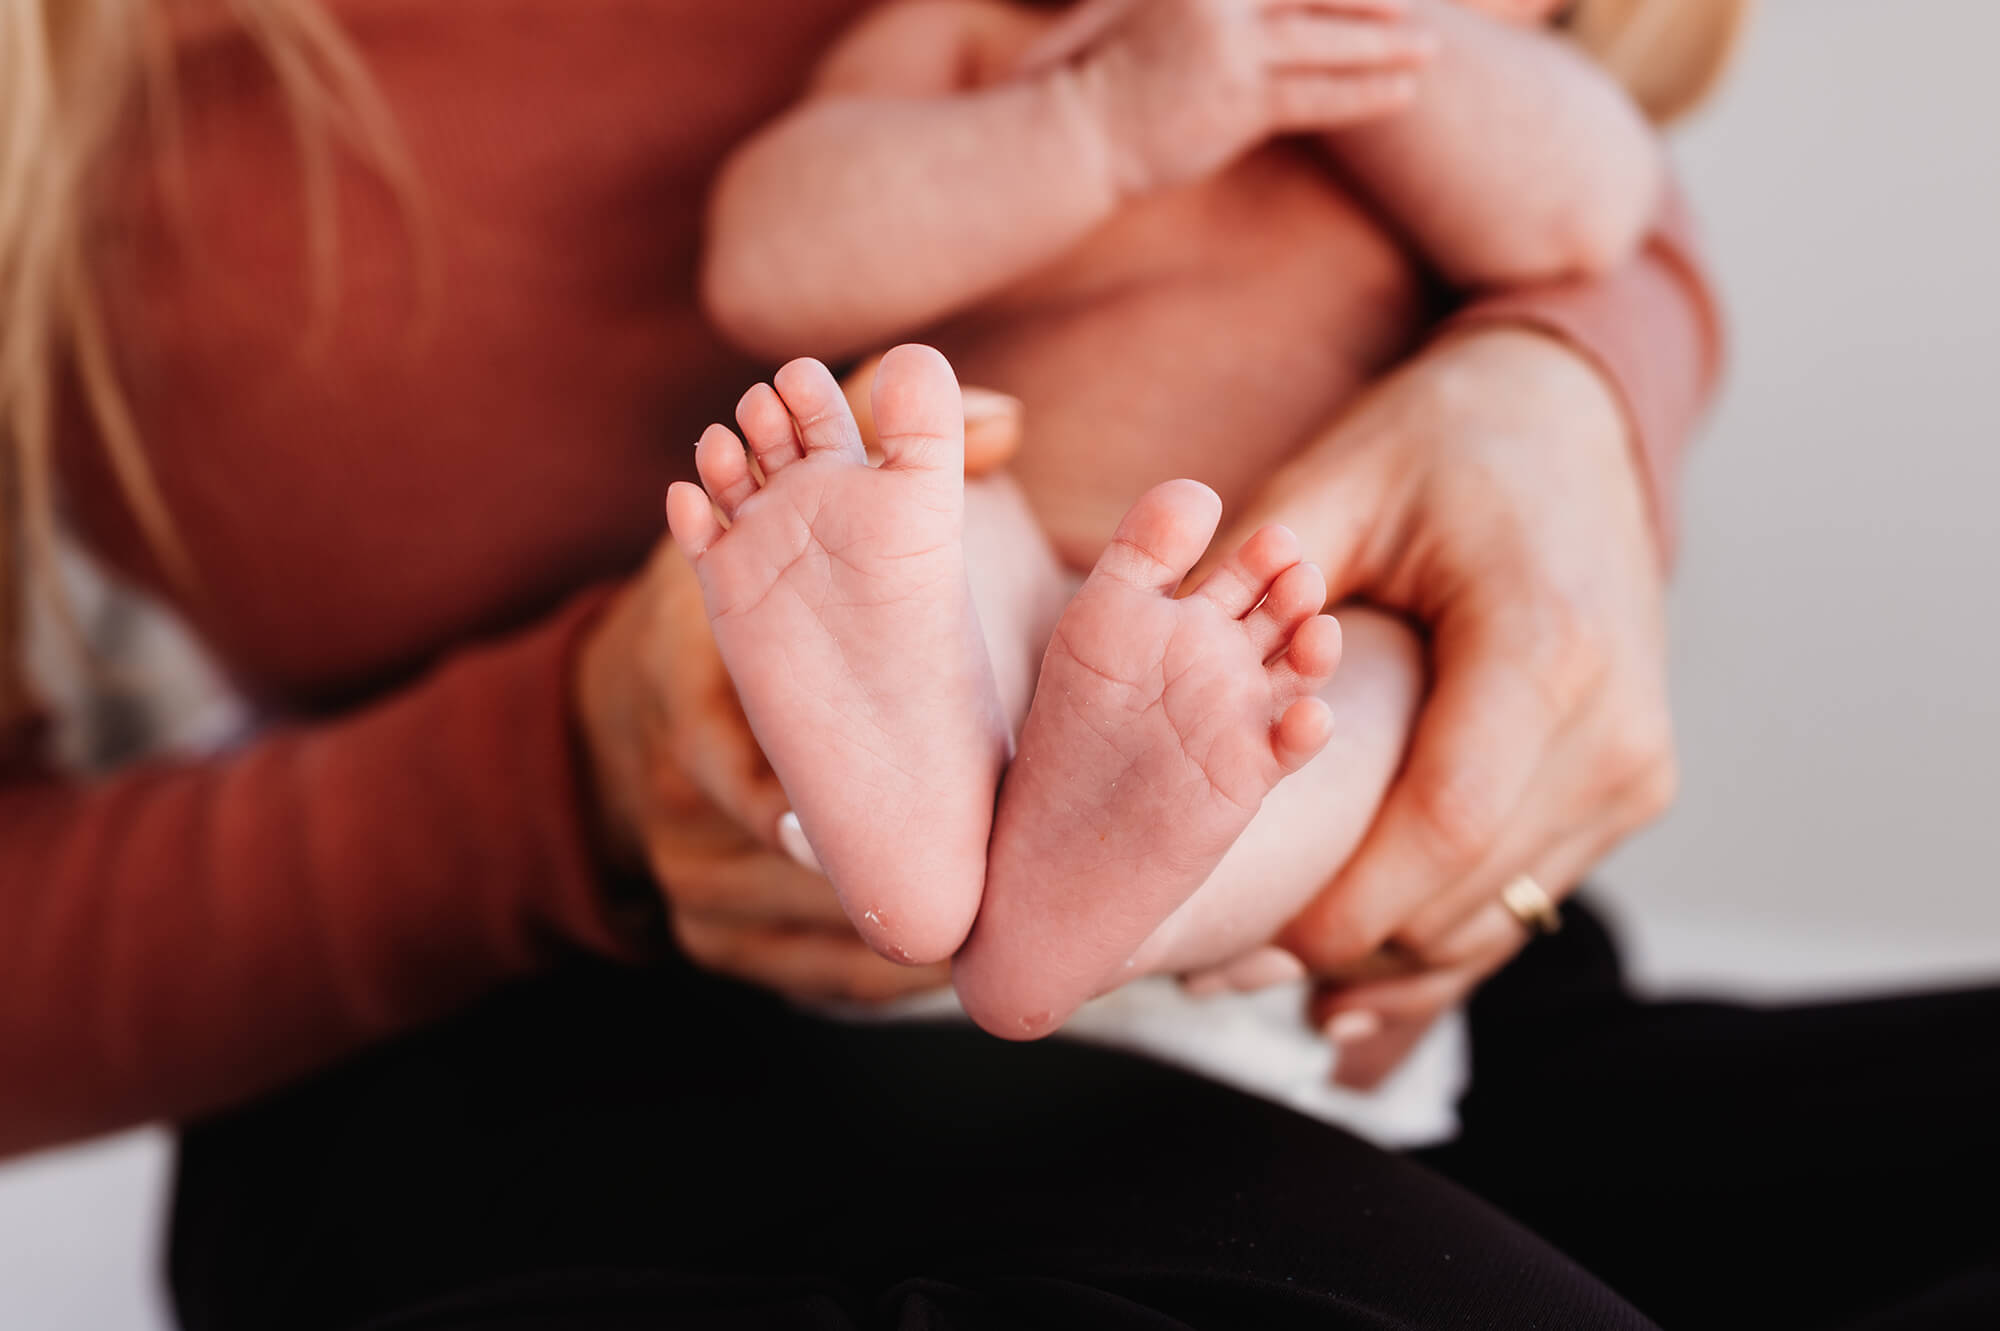 Springfield MO newborn photographer captures baby toes